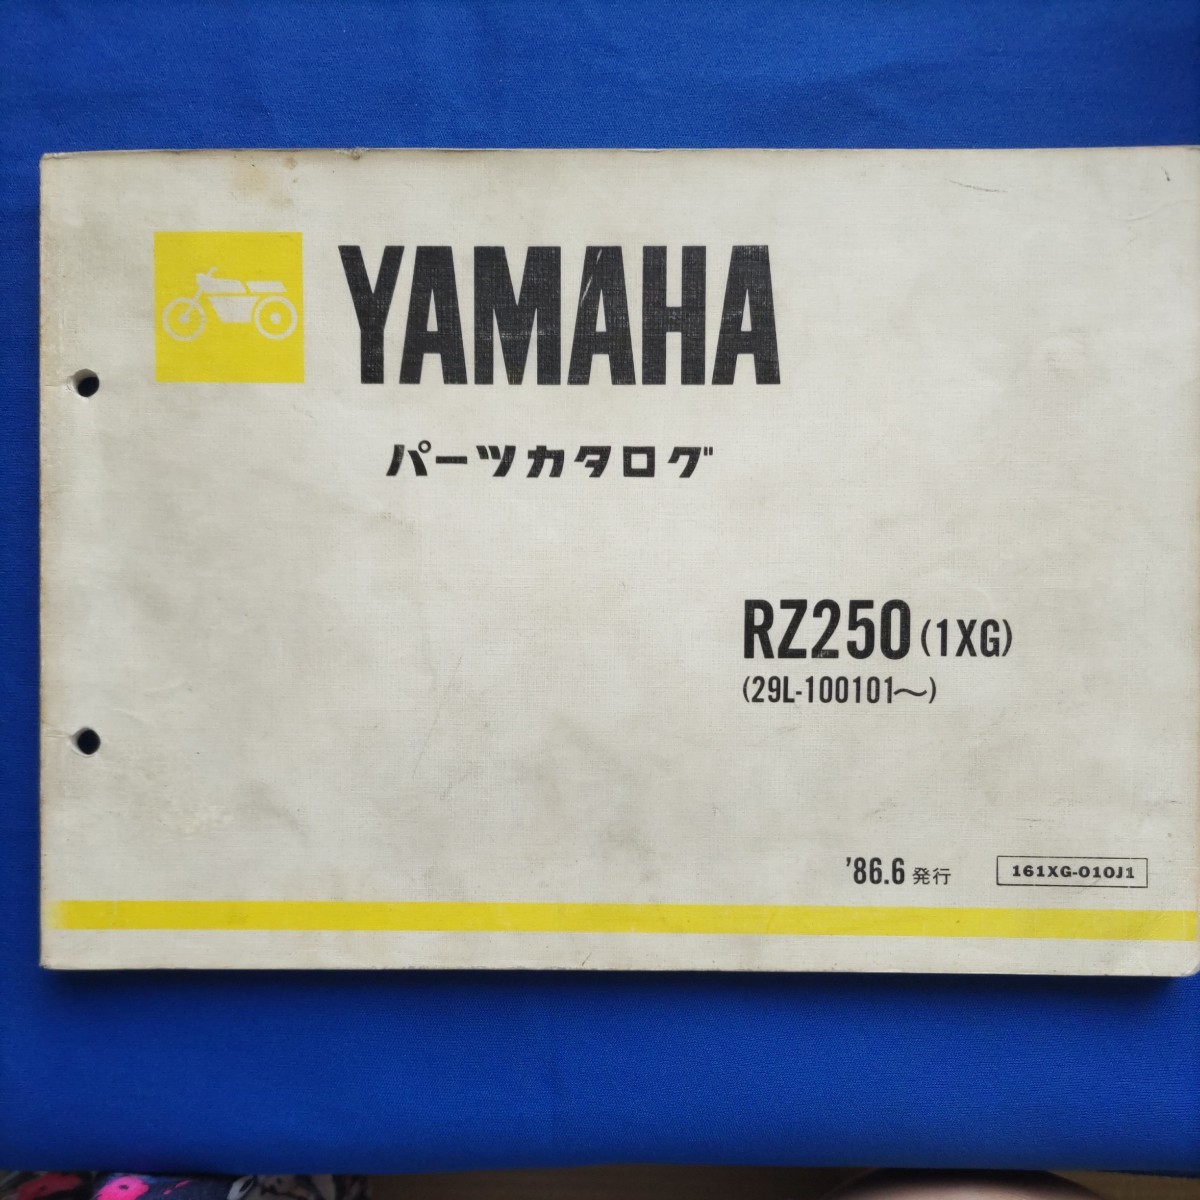 YAMAHA パーツカタログ RZ250(1XG)の画像1